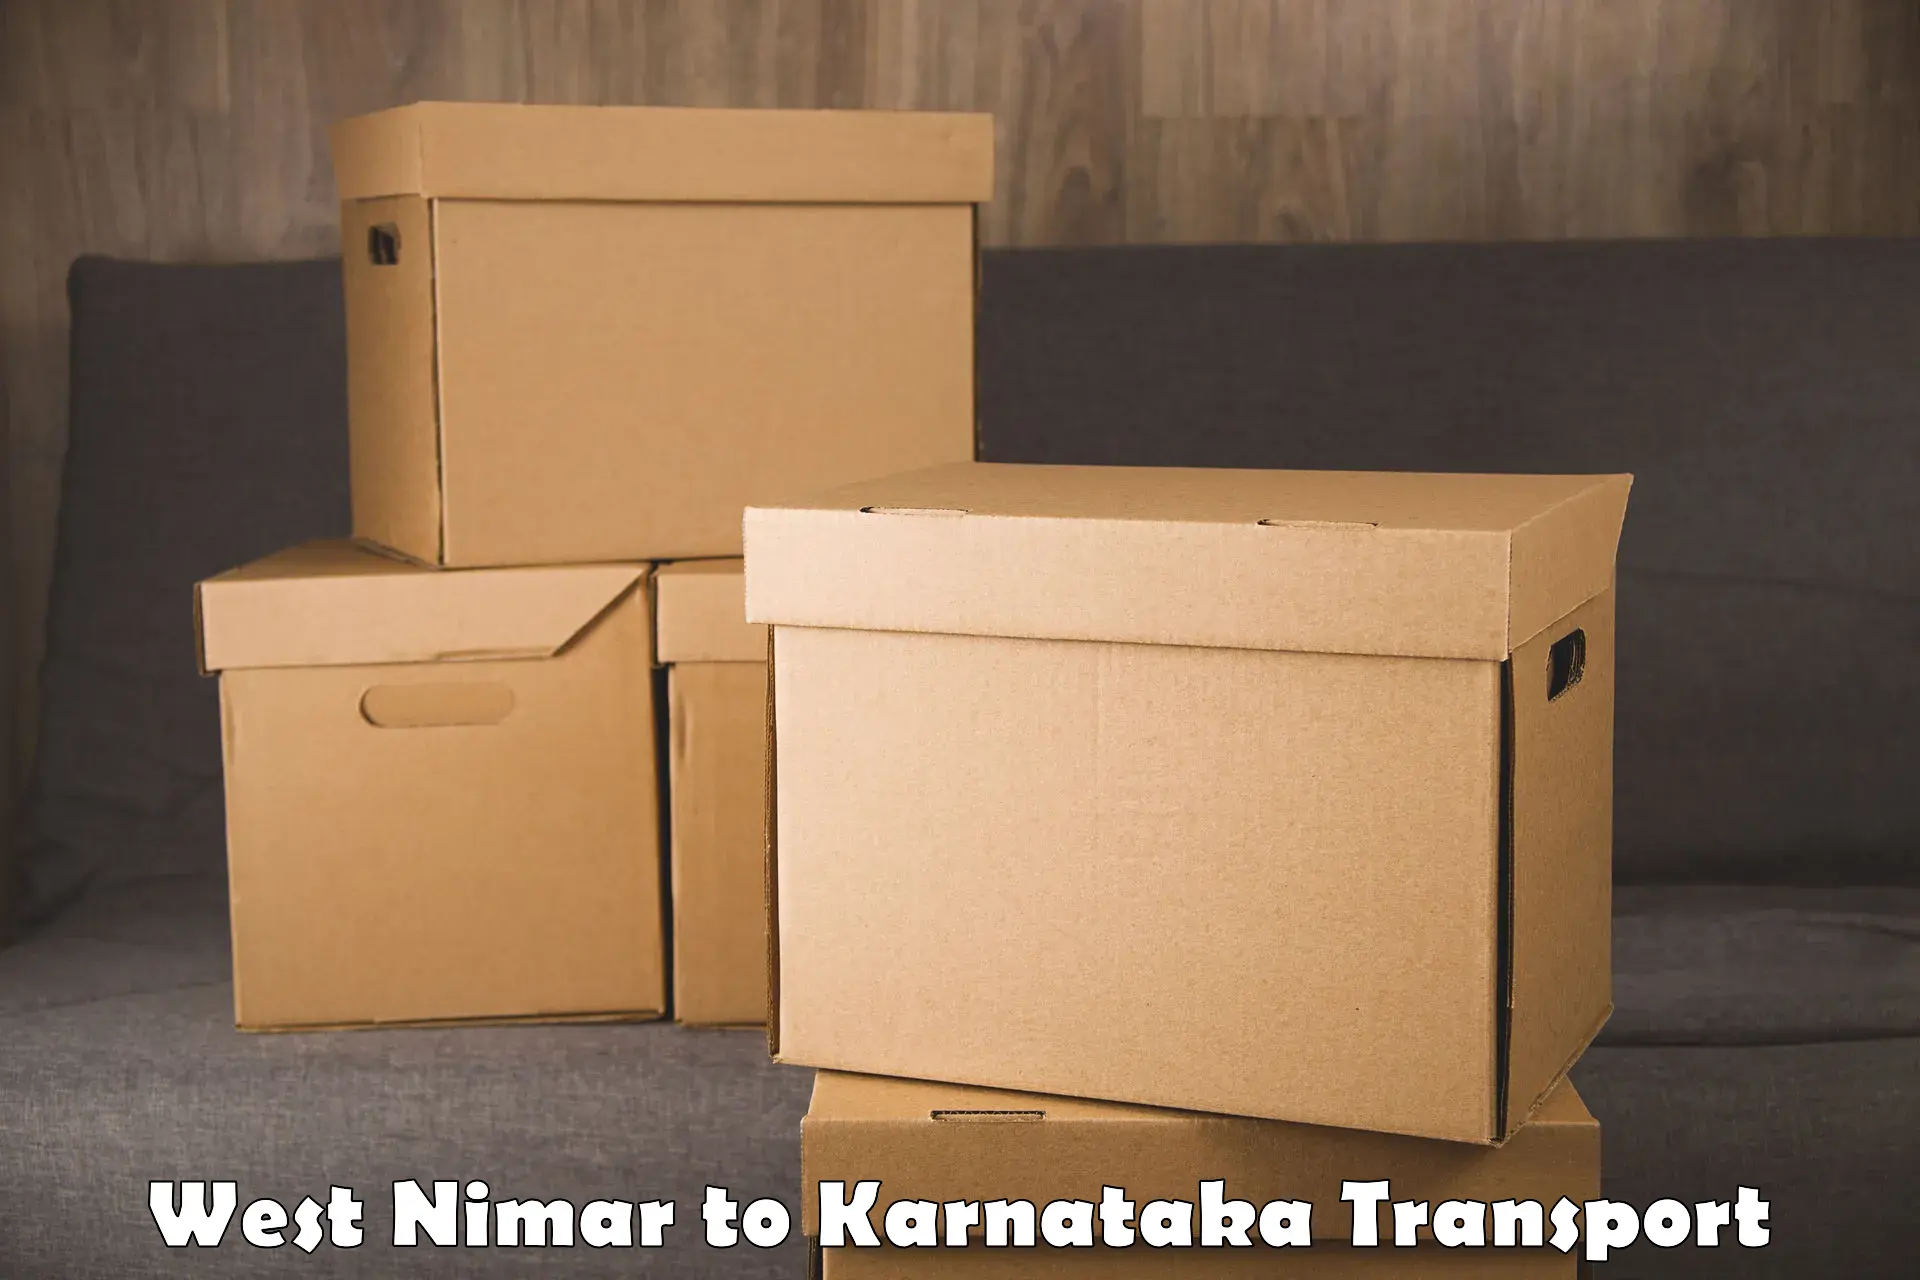 Vehicle transport services West Nimar to Mysore